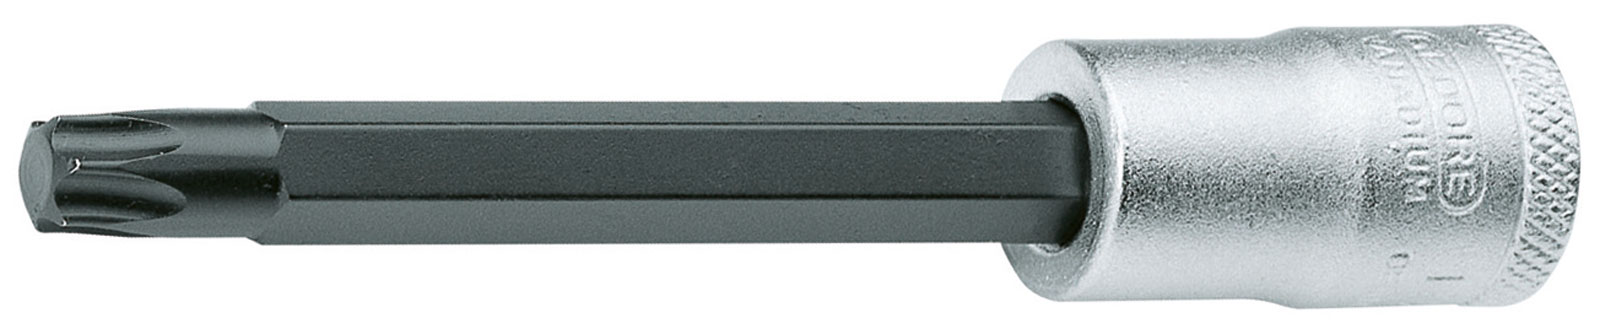 Picture of ITX 30 L T30 Schraubendrehereinsatz 3/8" lang Innen-TORX T30